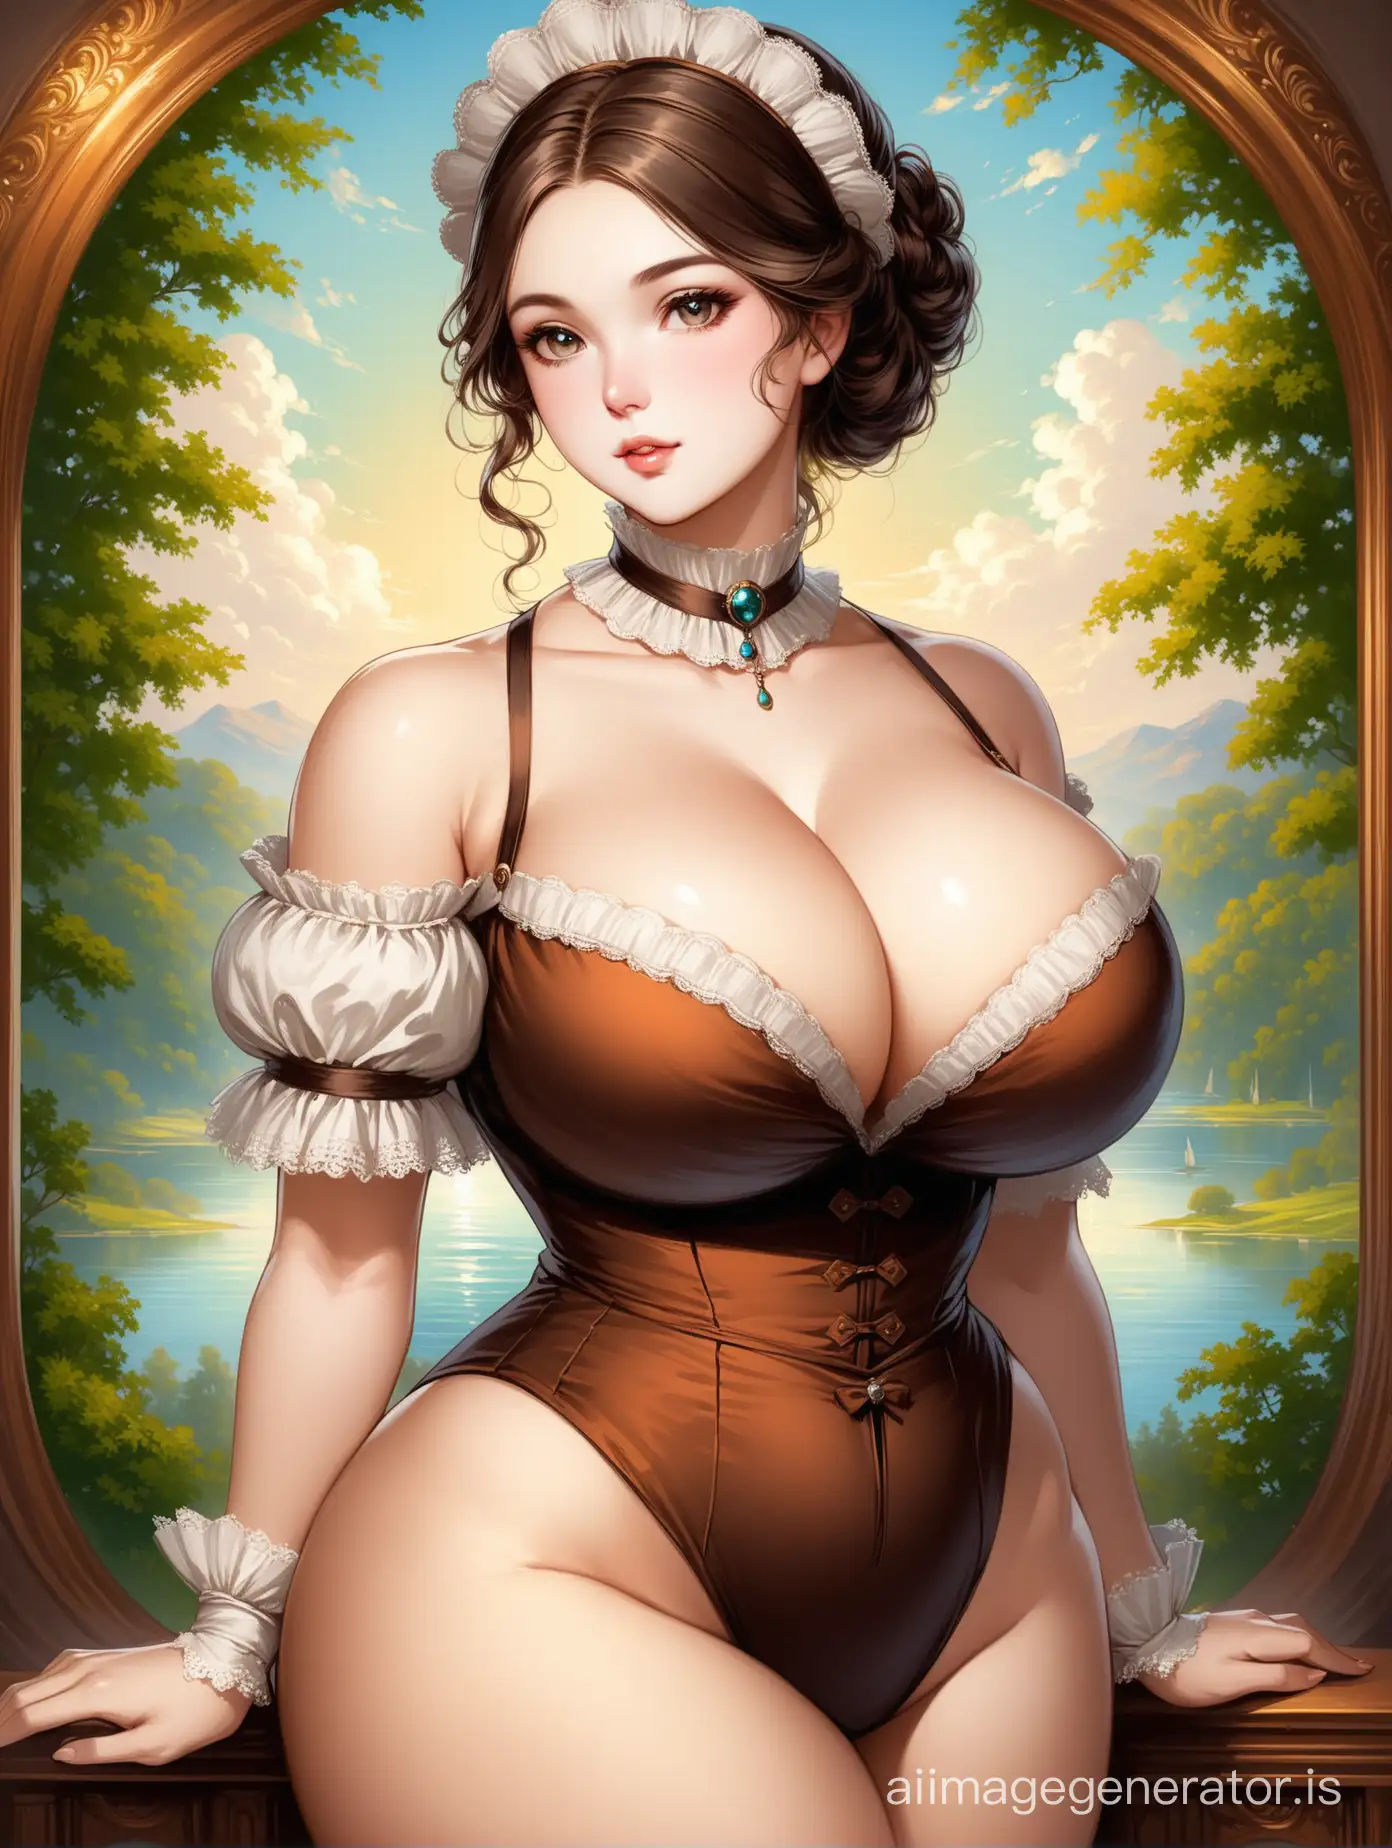 Victorian era, painting style, beautiful woman, big breast, curvy